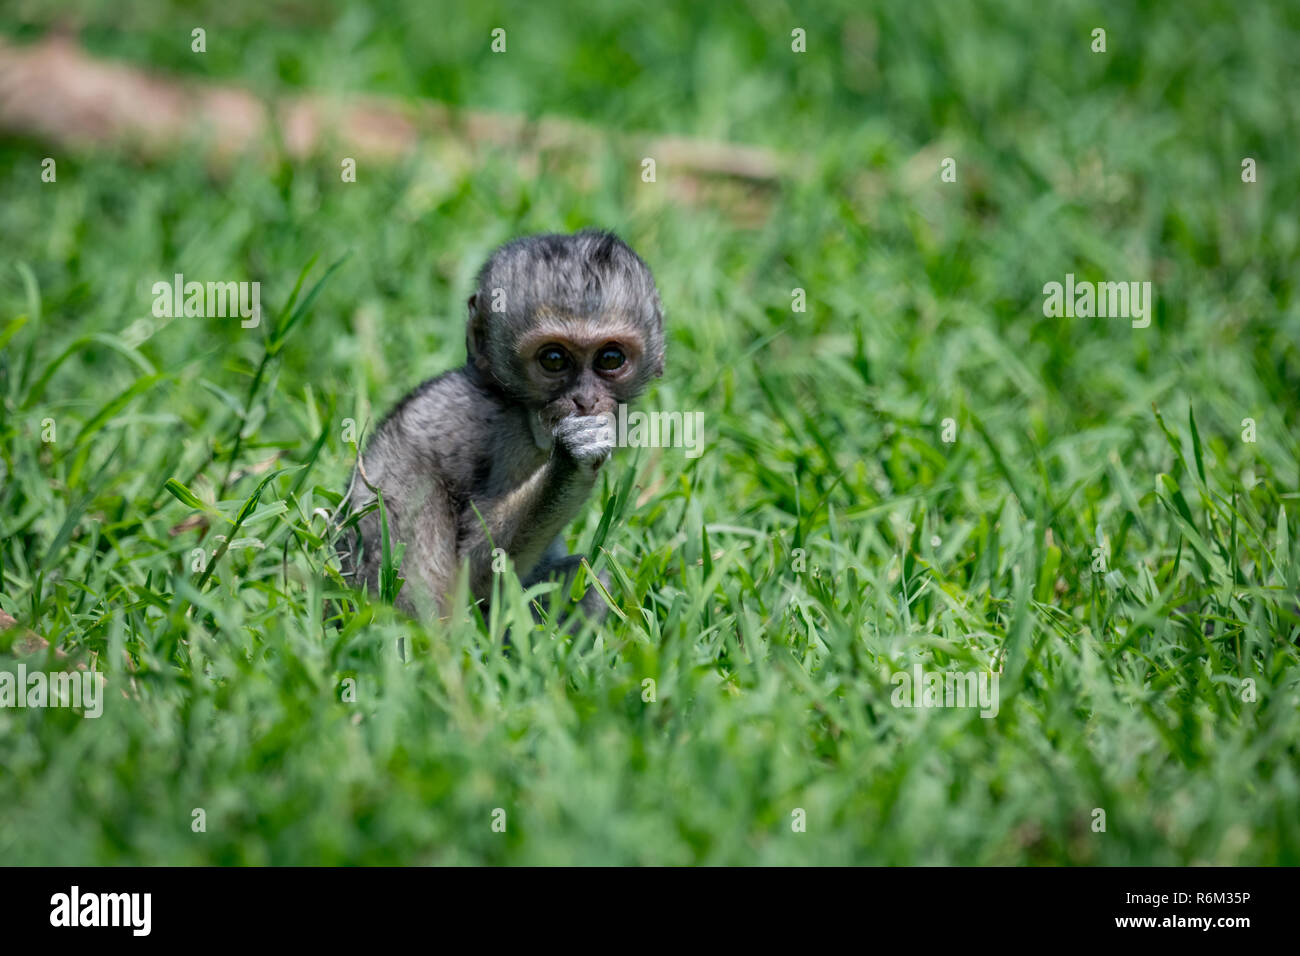 Baby vervet monkey facing camera in grass Stock Photo